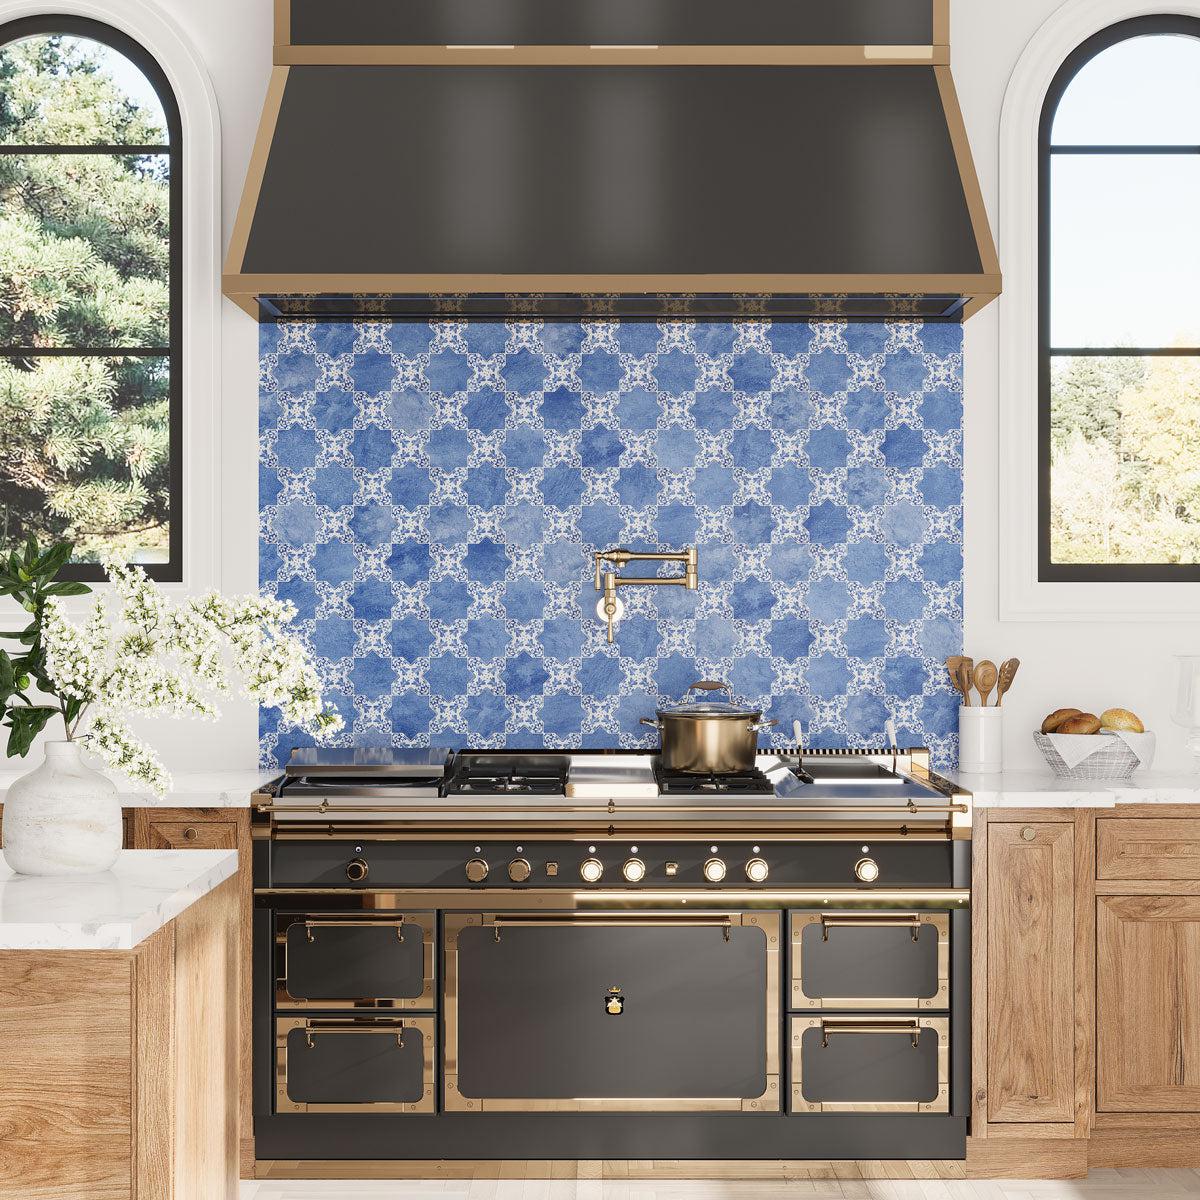 California kitchen with Santa Barbara Sky Blue Star and Decorative Cross ceramic tile backsplash